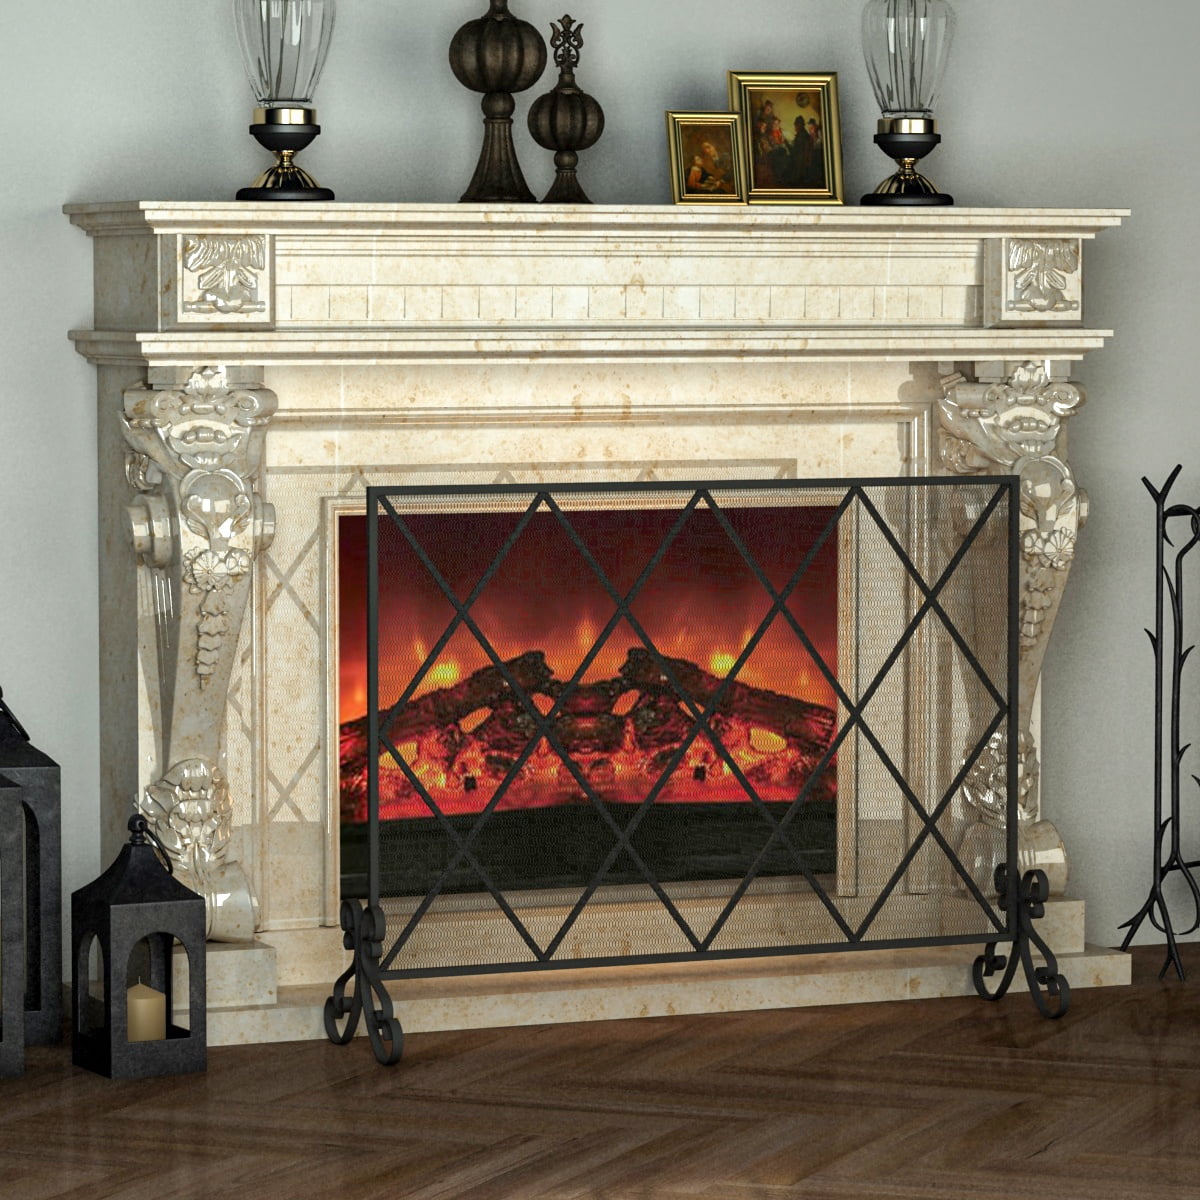 Decorative fireplace screens - dikino